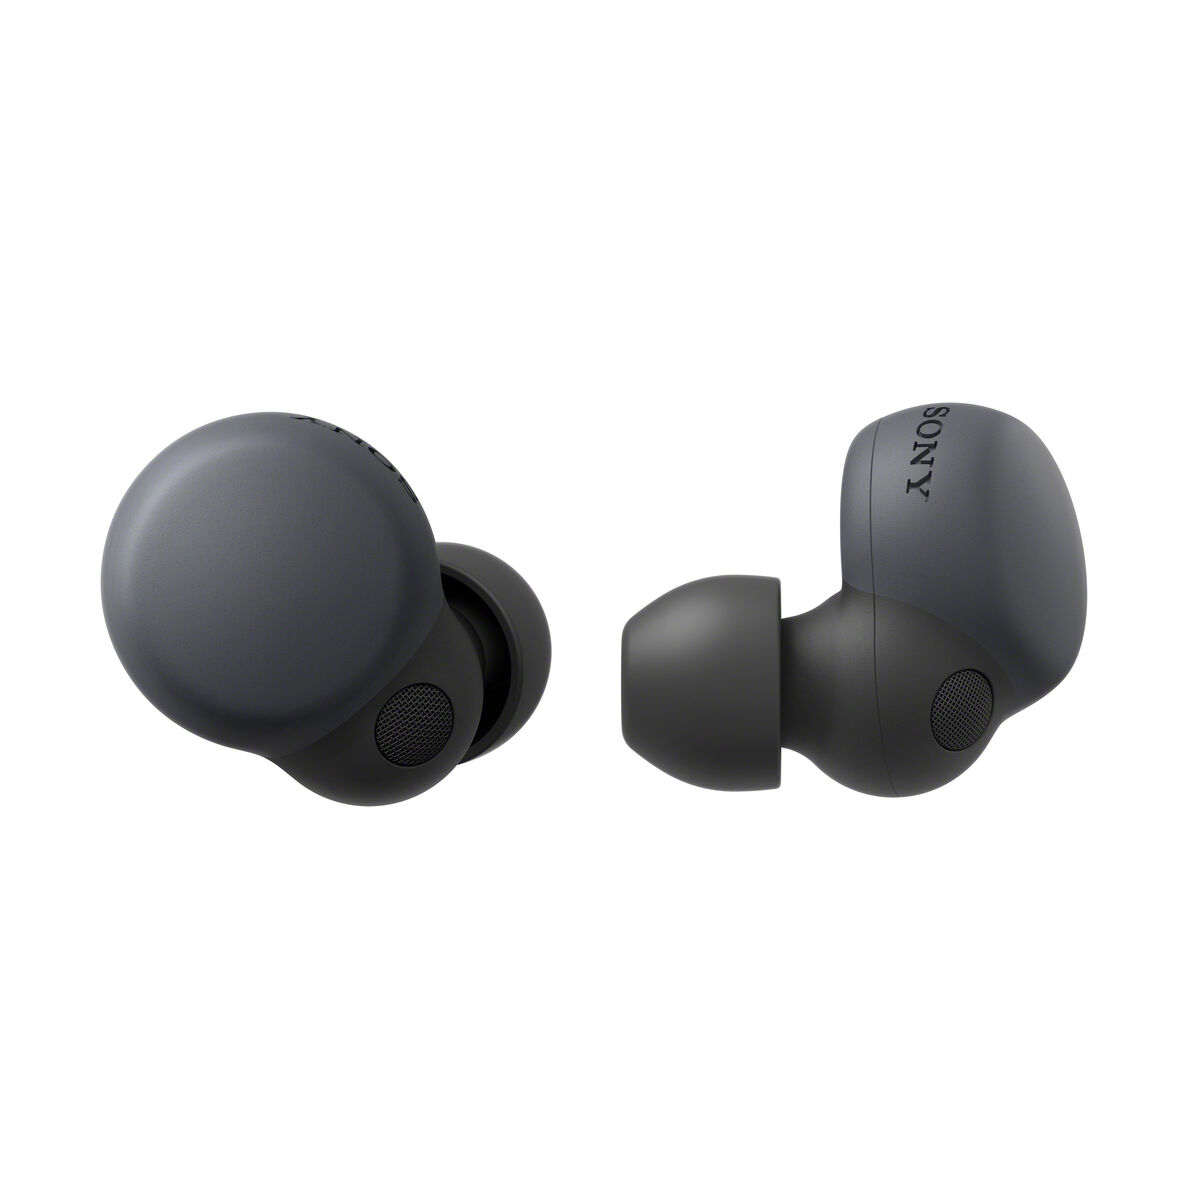 Auriculares Bluetooth Sony Wf-l900 - Negro - Auriculares Bluetooth Sony Wf-l900  MKP